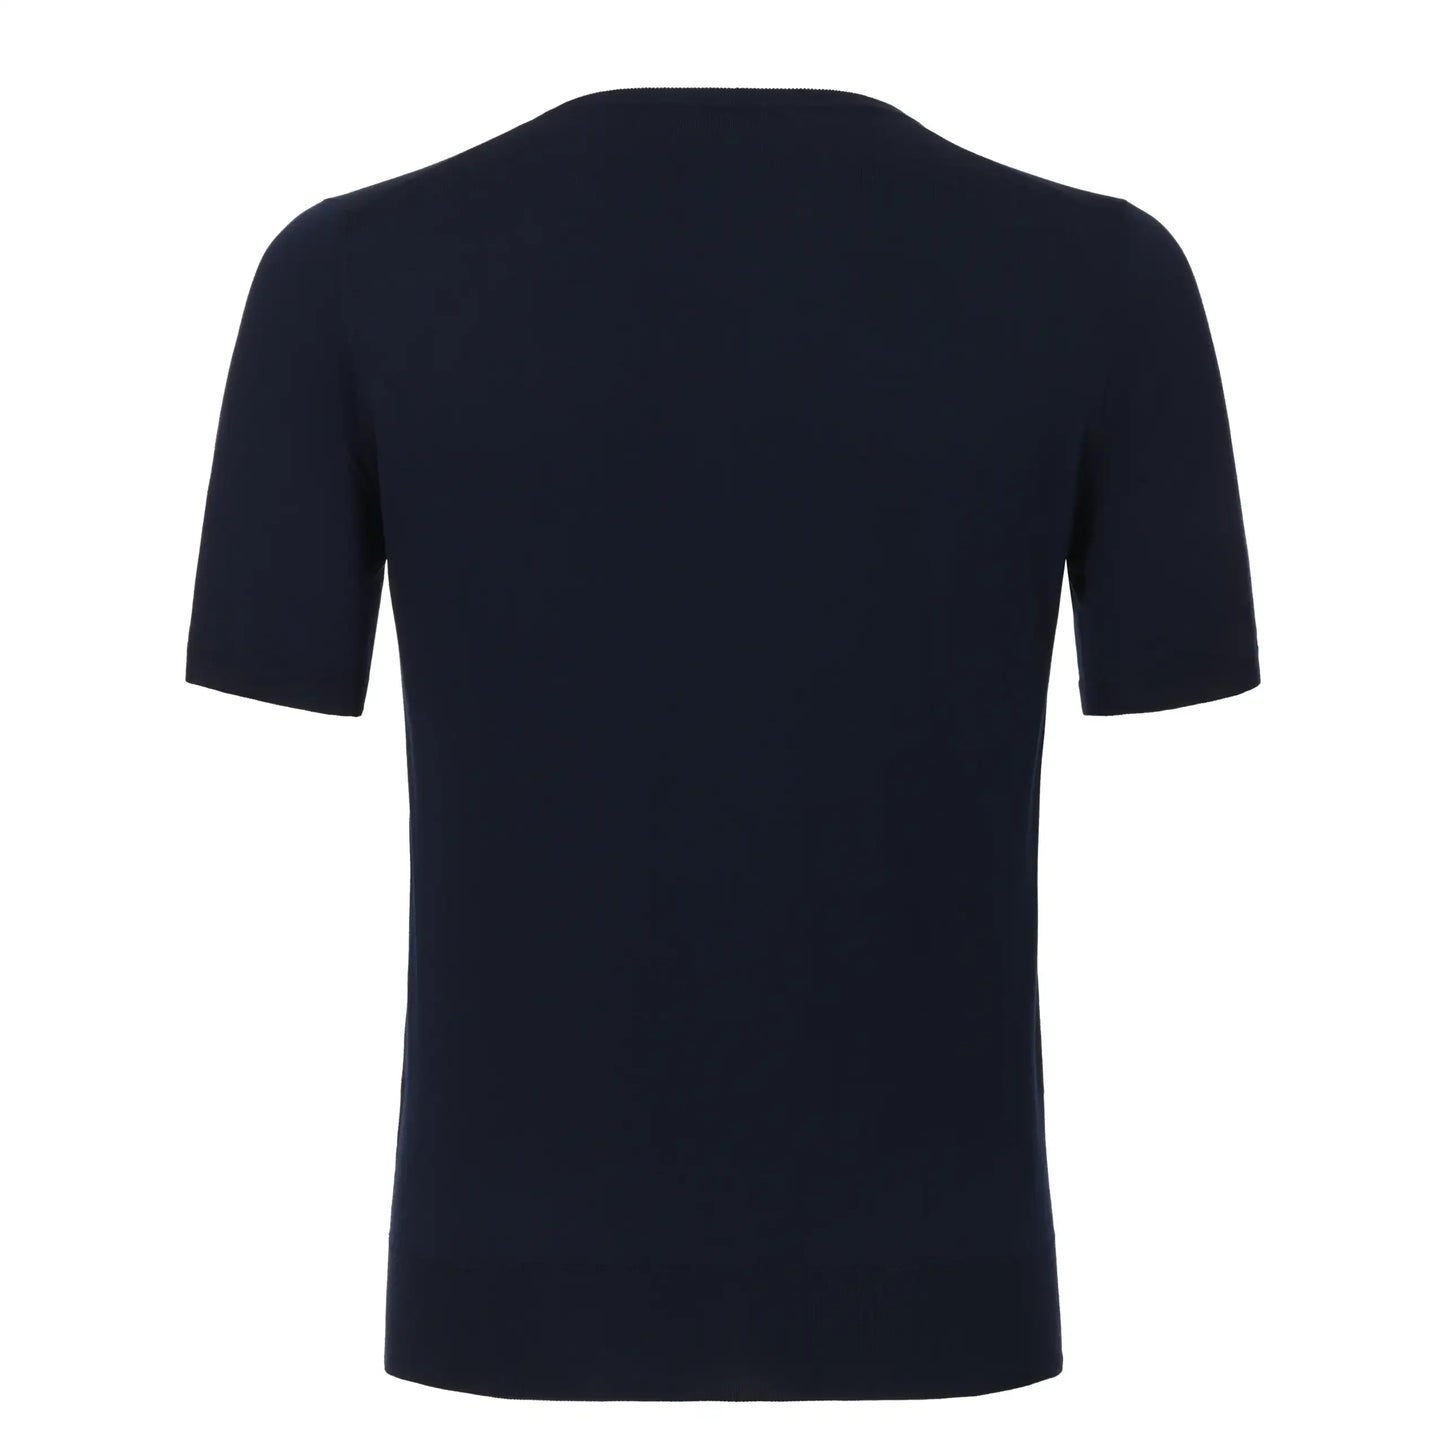 Cotton Dark Blue T-Shirt Sweater